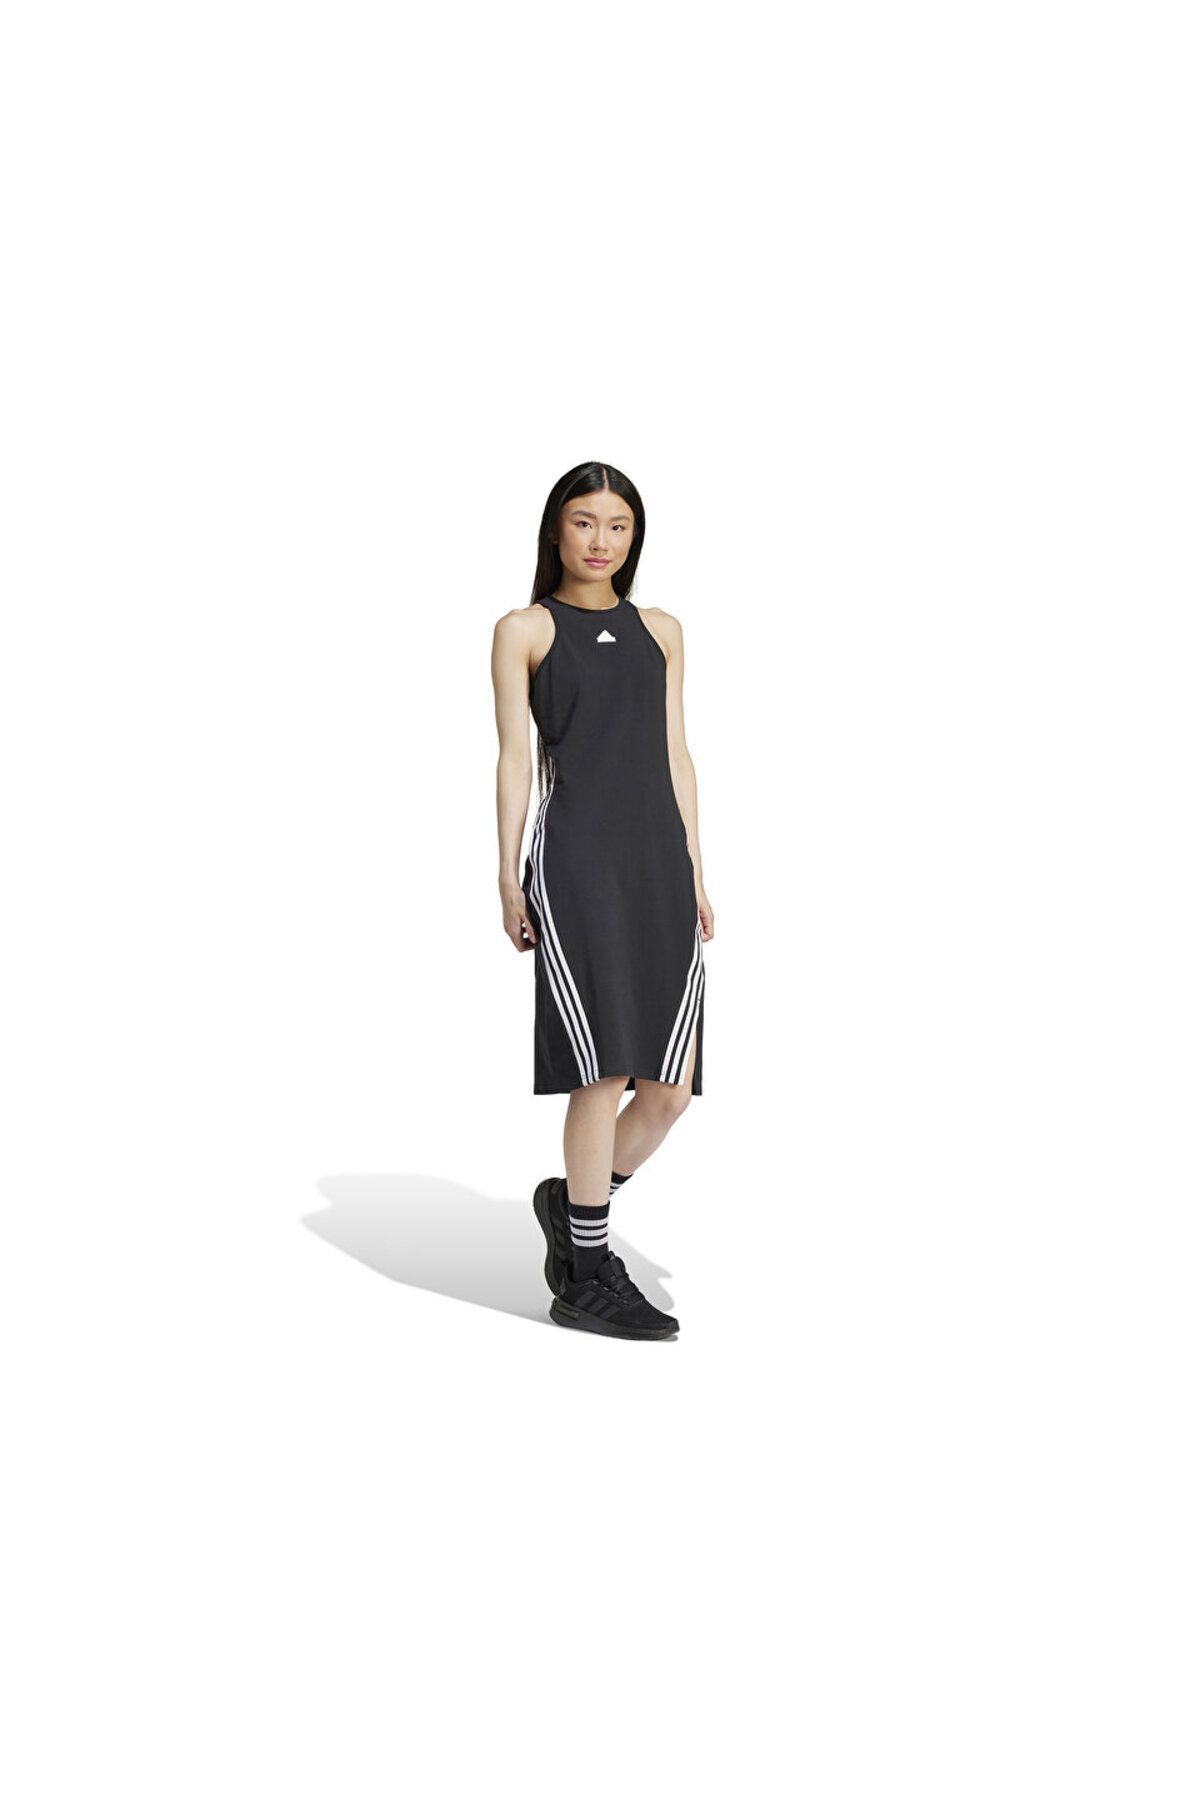 adidas W Fi 3S Dress Kadın Günlük Elbise IP1575 Siyah Fiyatı, Yorumları ...